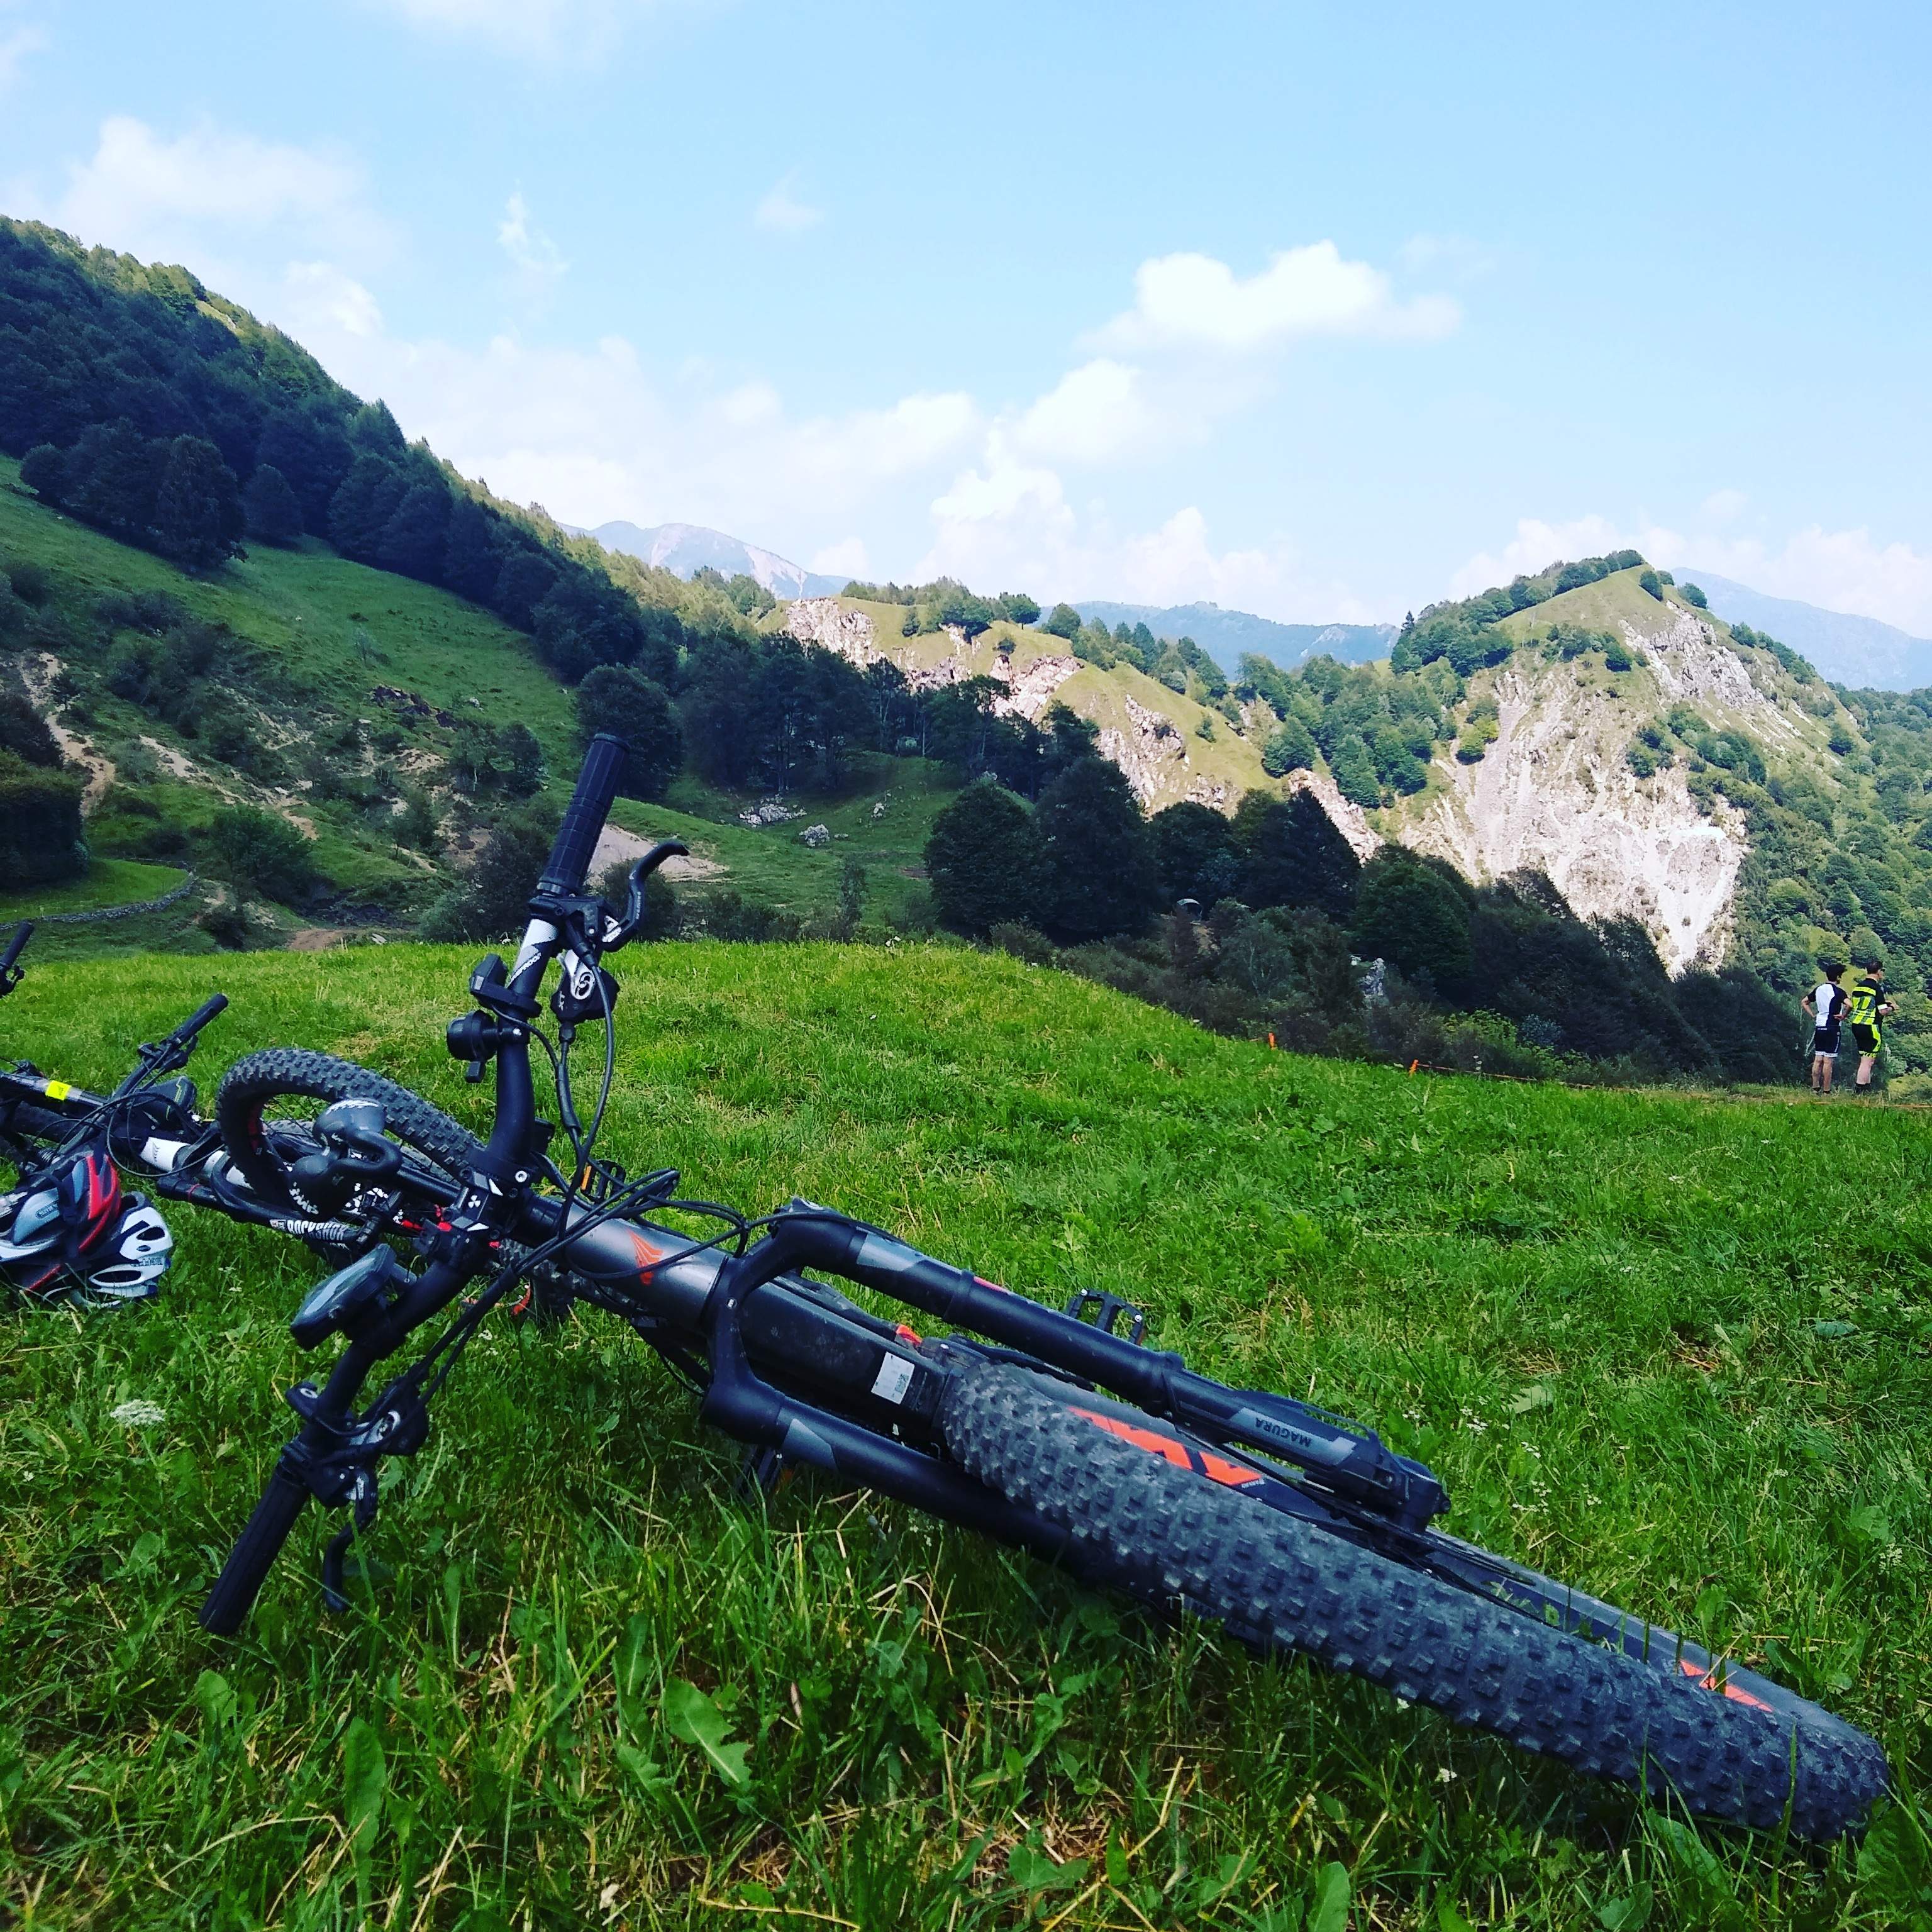 Svart Mountainbike ligger i grönt gräs med berg i bakgrunden